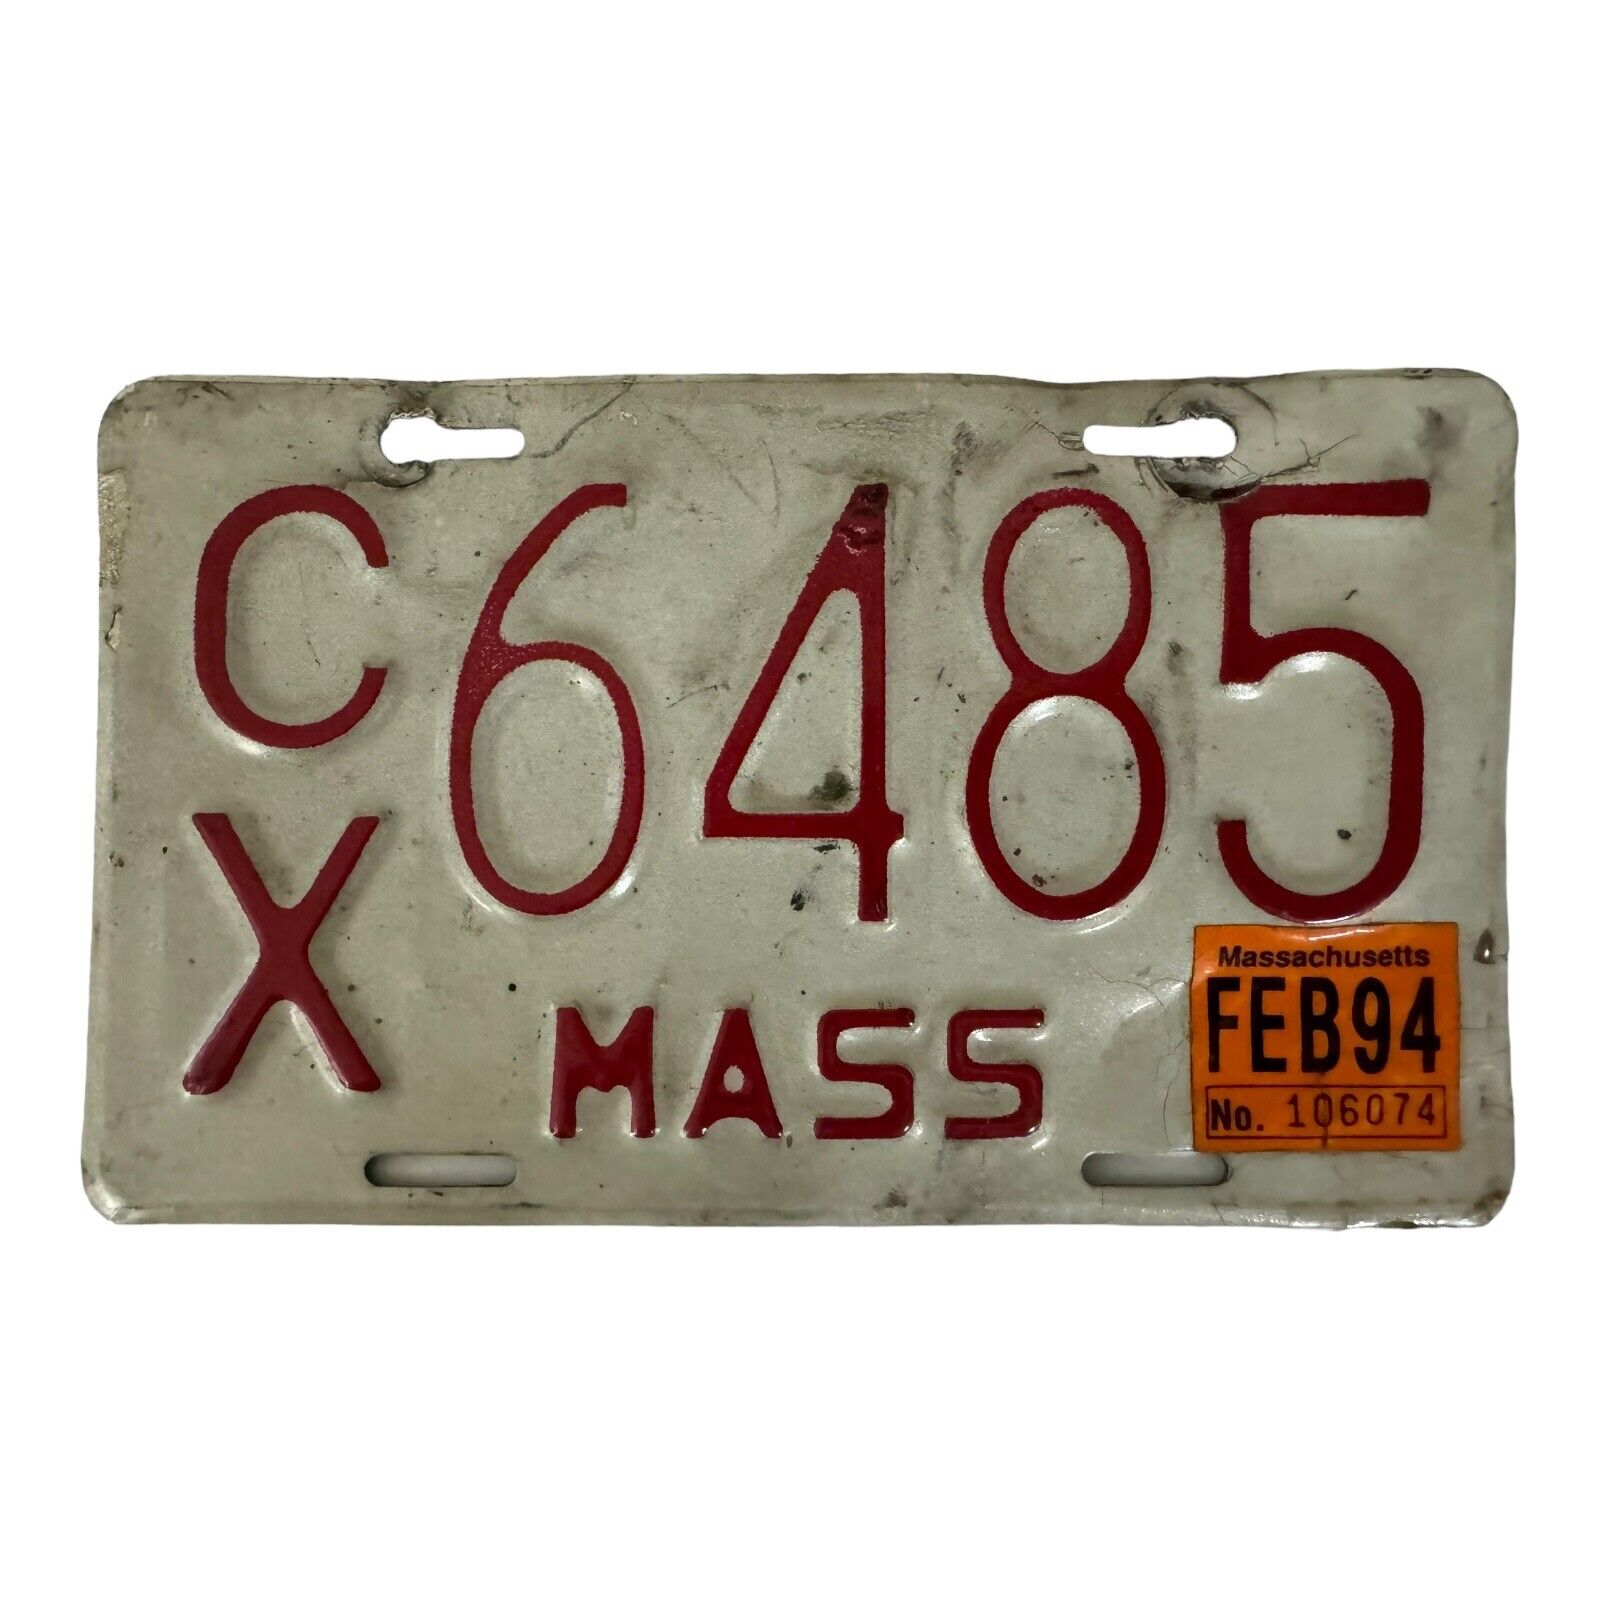 Massachusetts MA 1985 Motorcycle License Plate MASS CX 6485 Vintage DMV Reg 1994